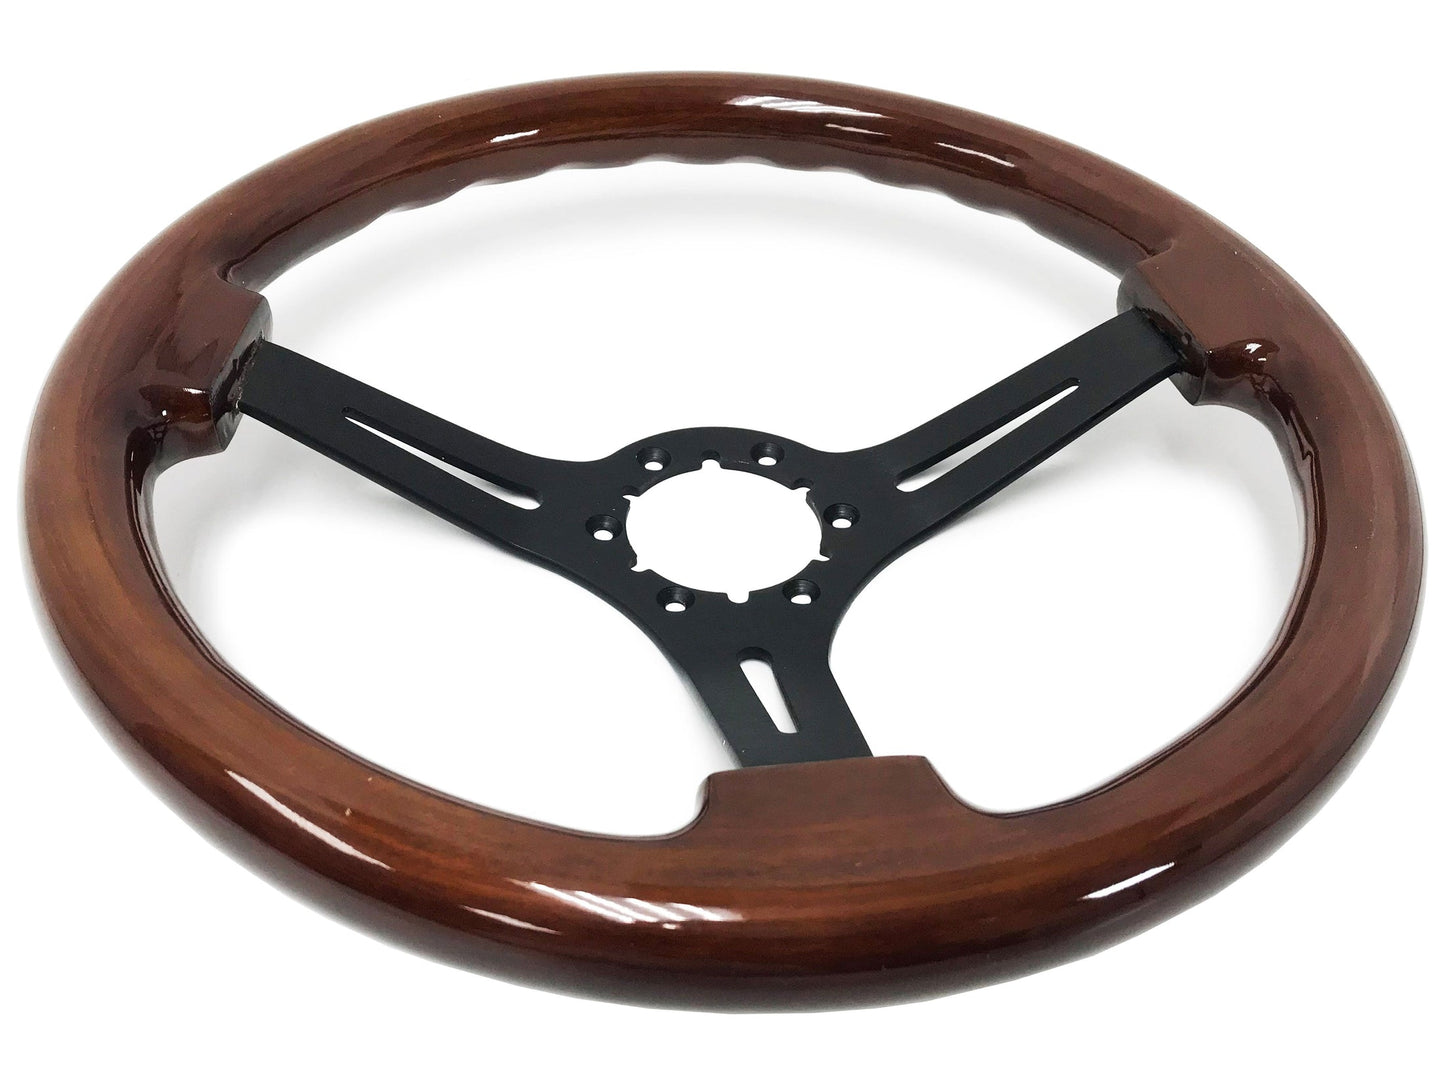 1965-69 Ford Falcon Steering Wheel Kit | Walnut Wood | ST3027